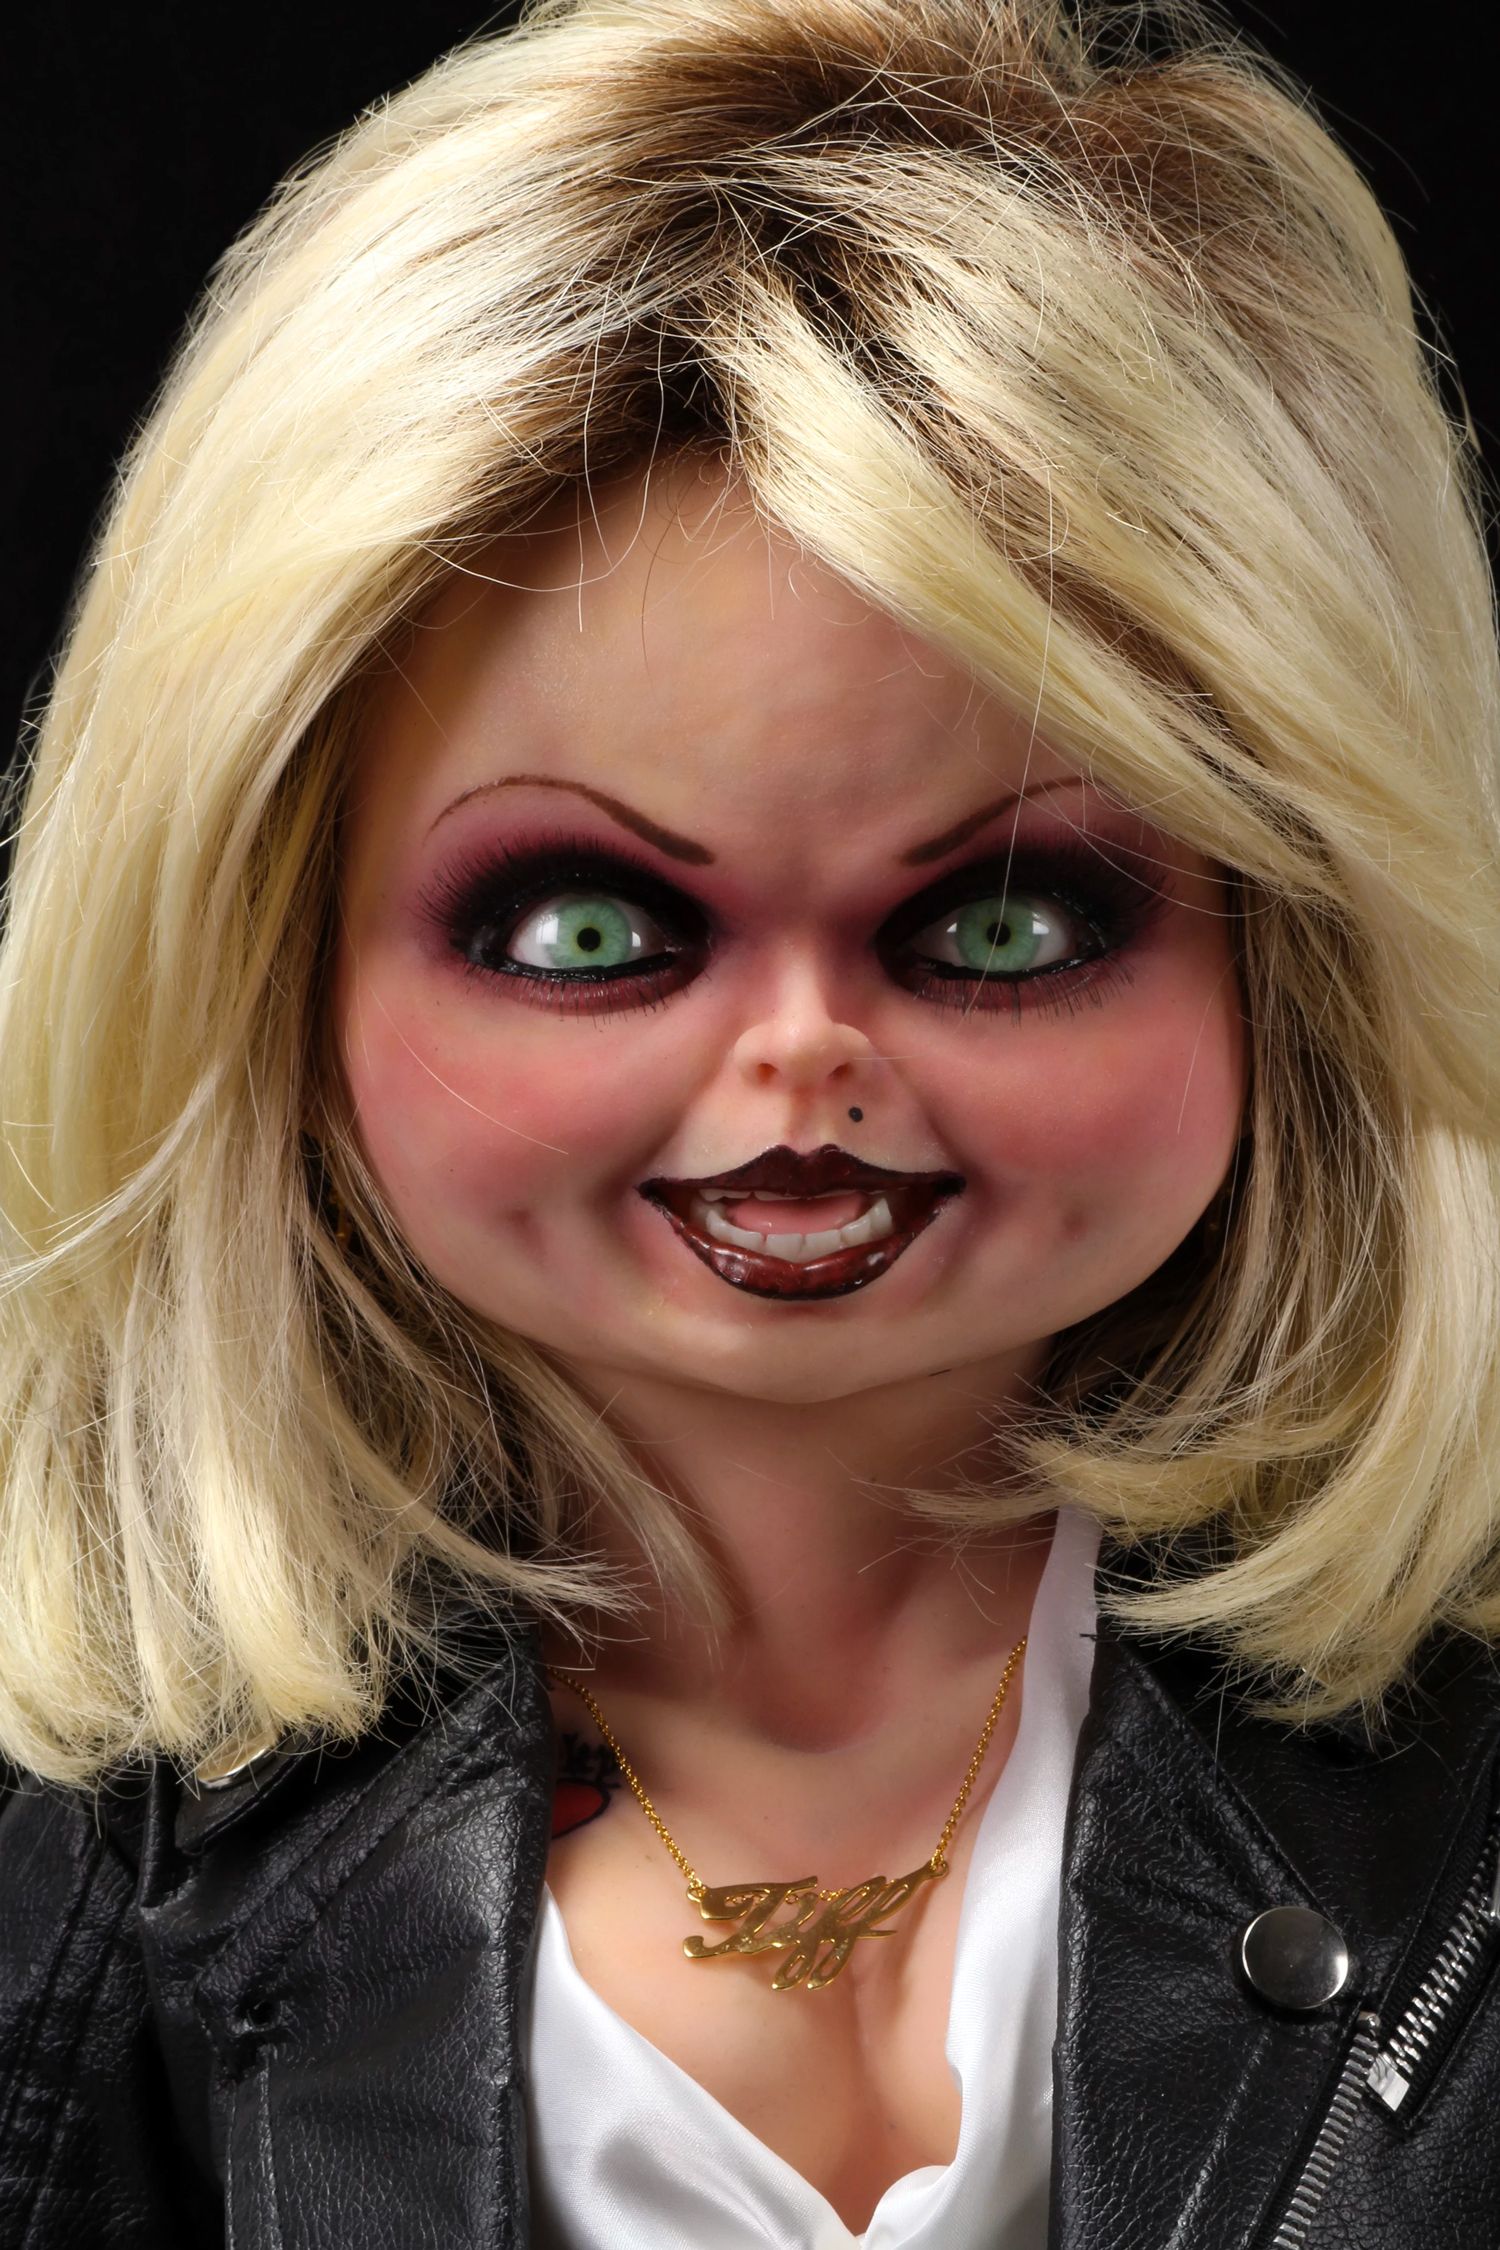 NECA Announces Life-Size Chucky & Tiffany Dolls from Bride of Chucky